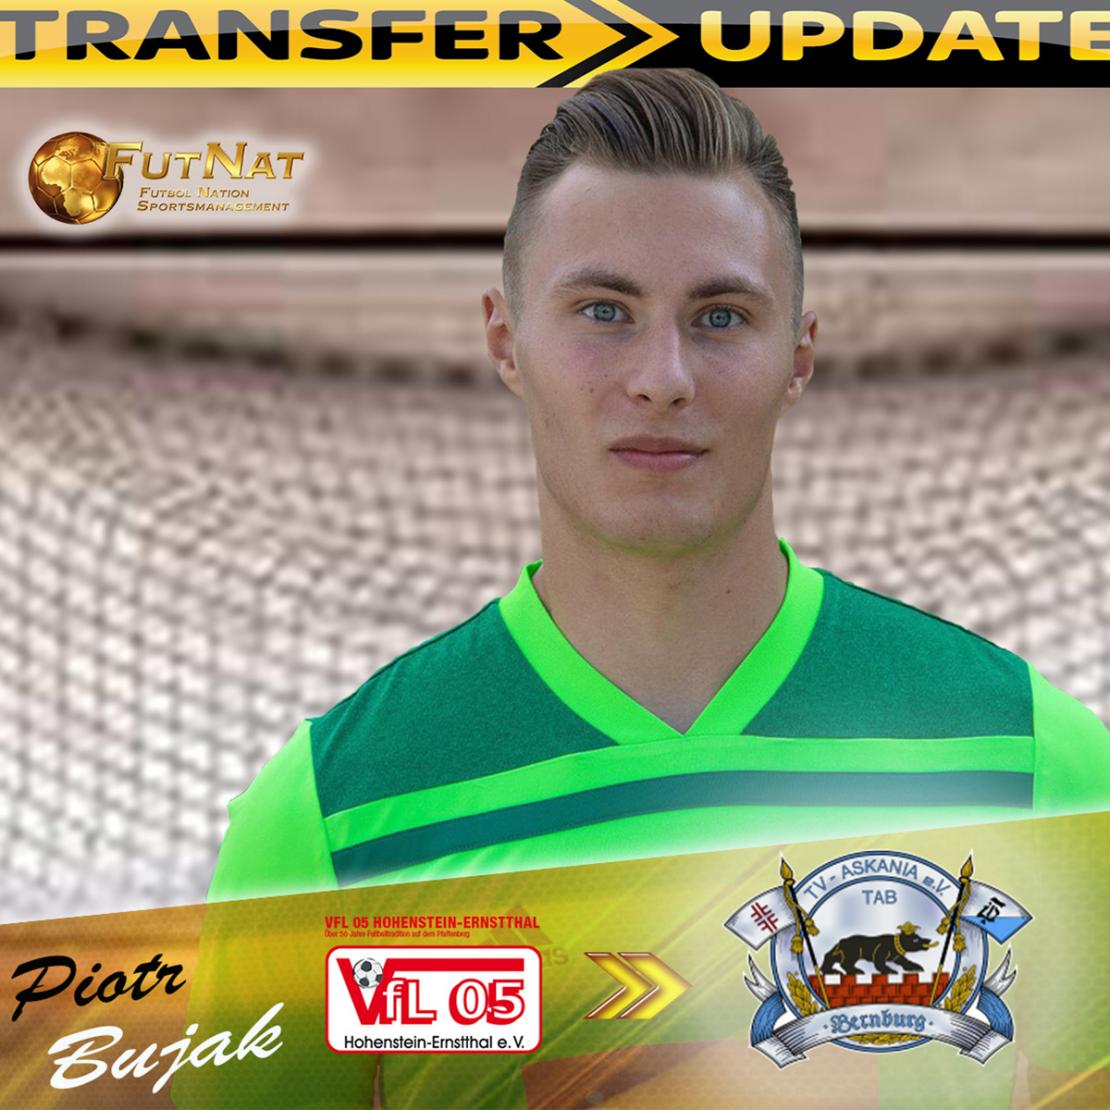 Piotr Bujak strengthen up TSV Askania Bernburg